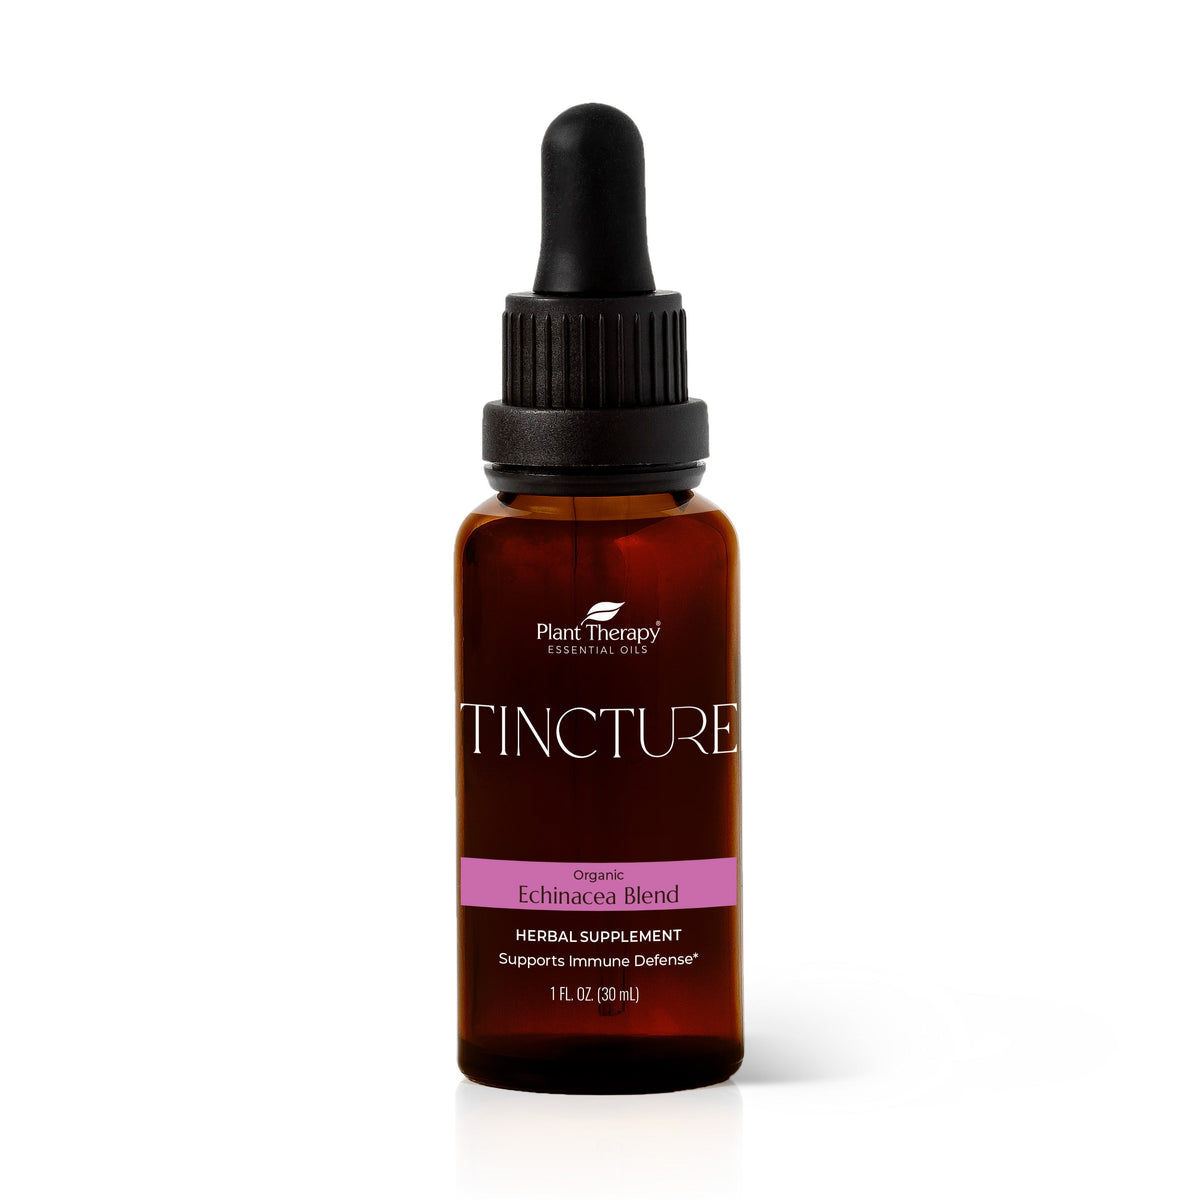 Organic Echinacea Blend Herbal Tincture